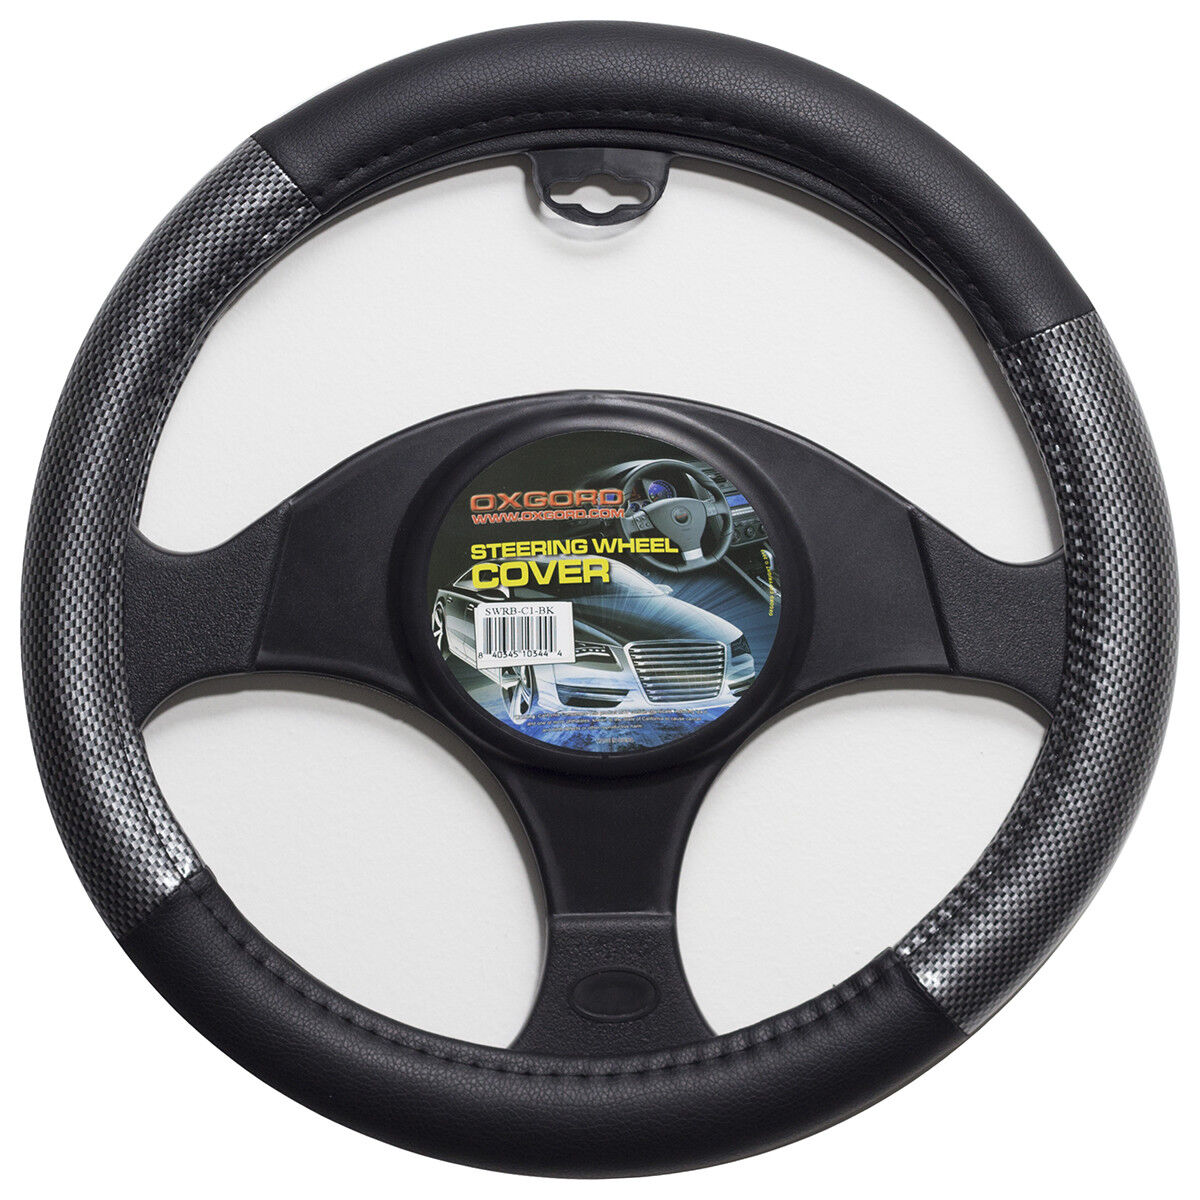 Carbon Fiber Steering Wheel Cover for Car Truck Van SUV Gray Black Vinyl Grip